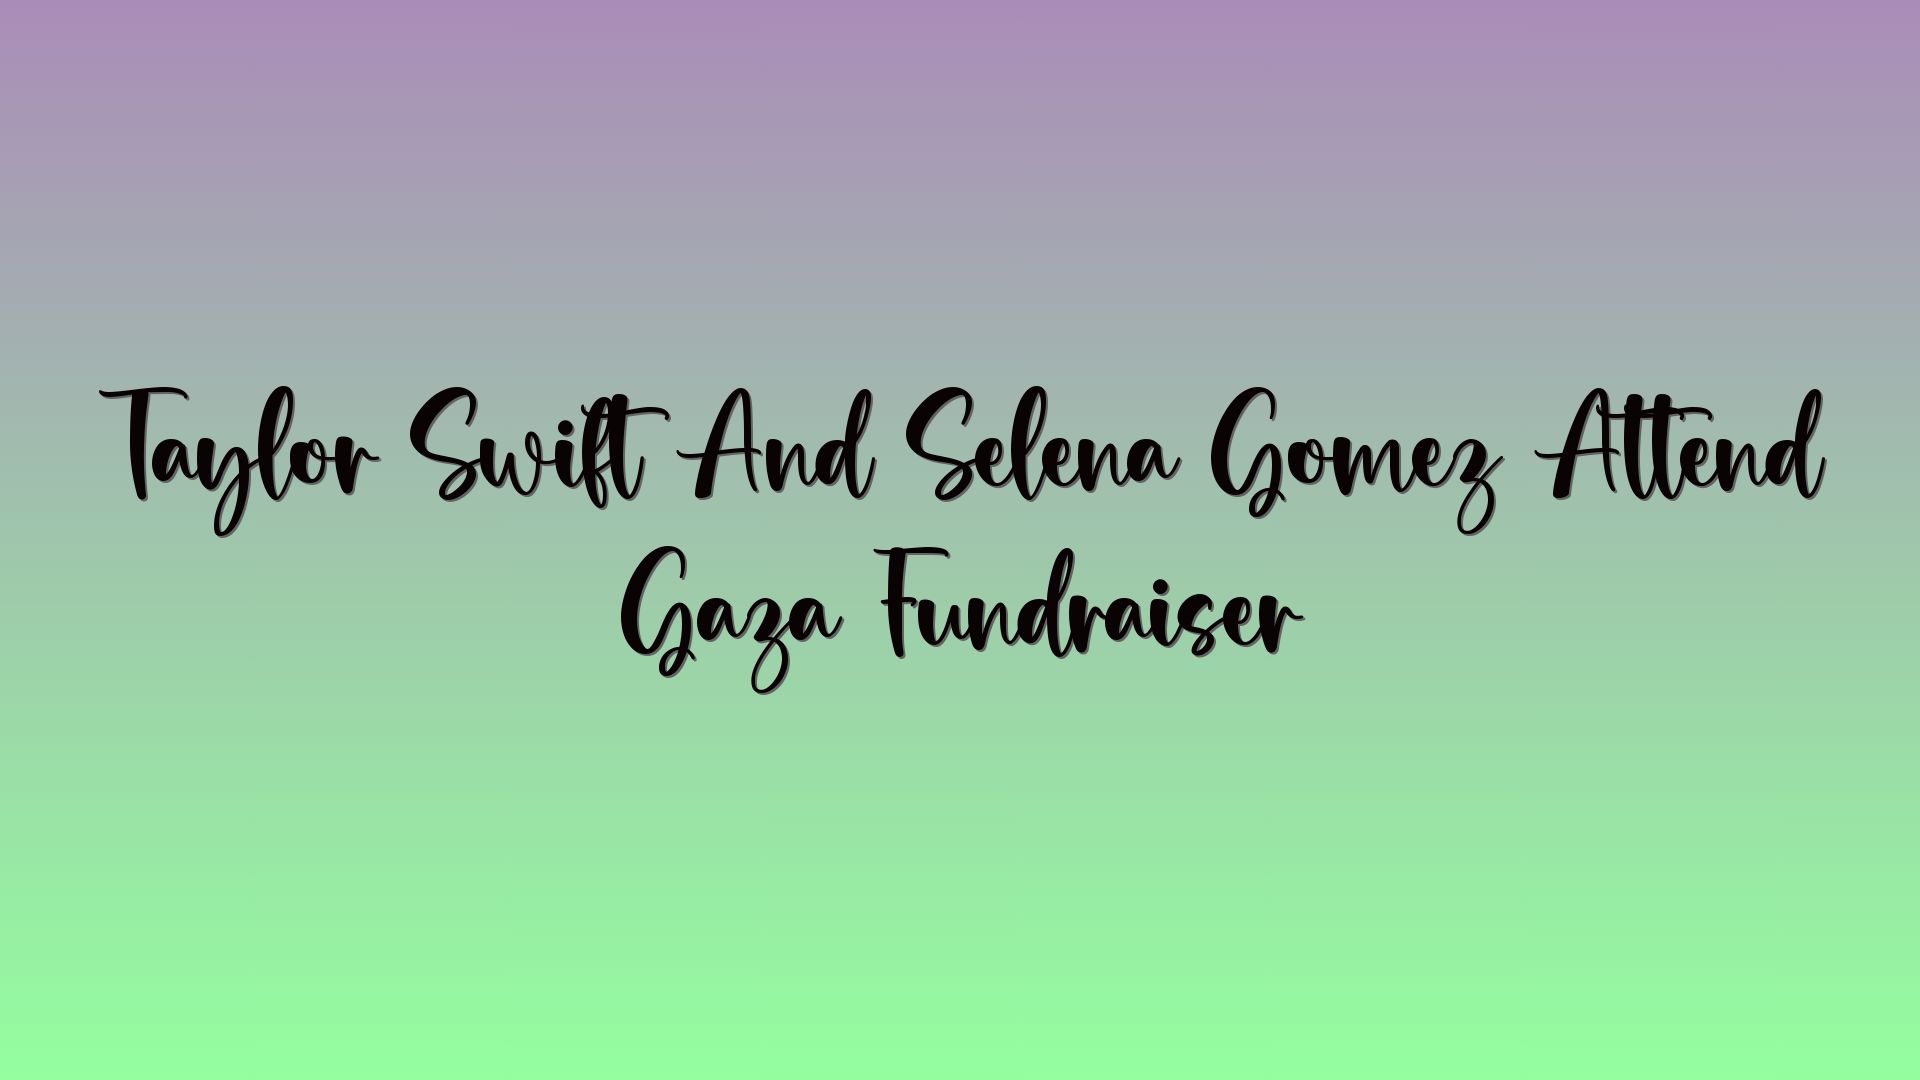 Taylor Swift And Selena Gomez Attend Gaza Fundraiser